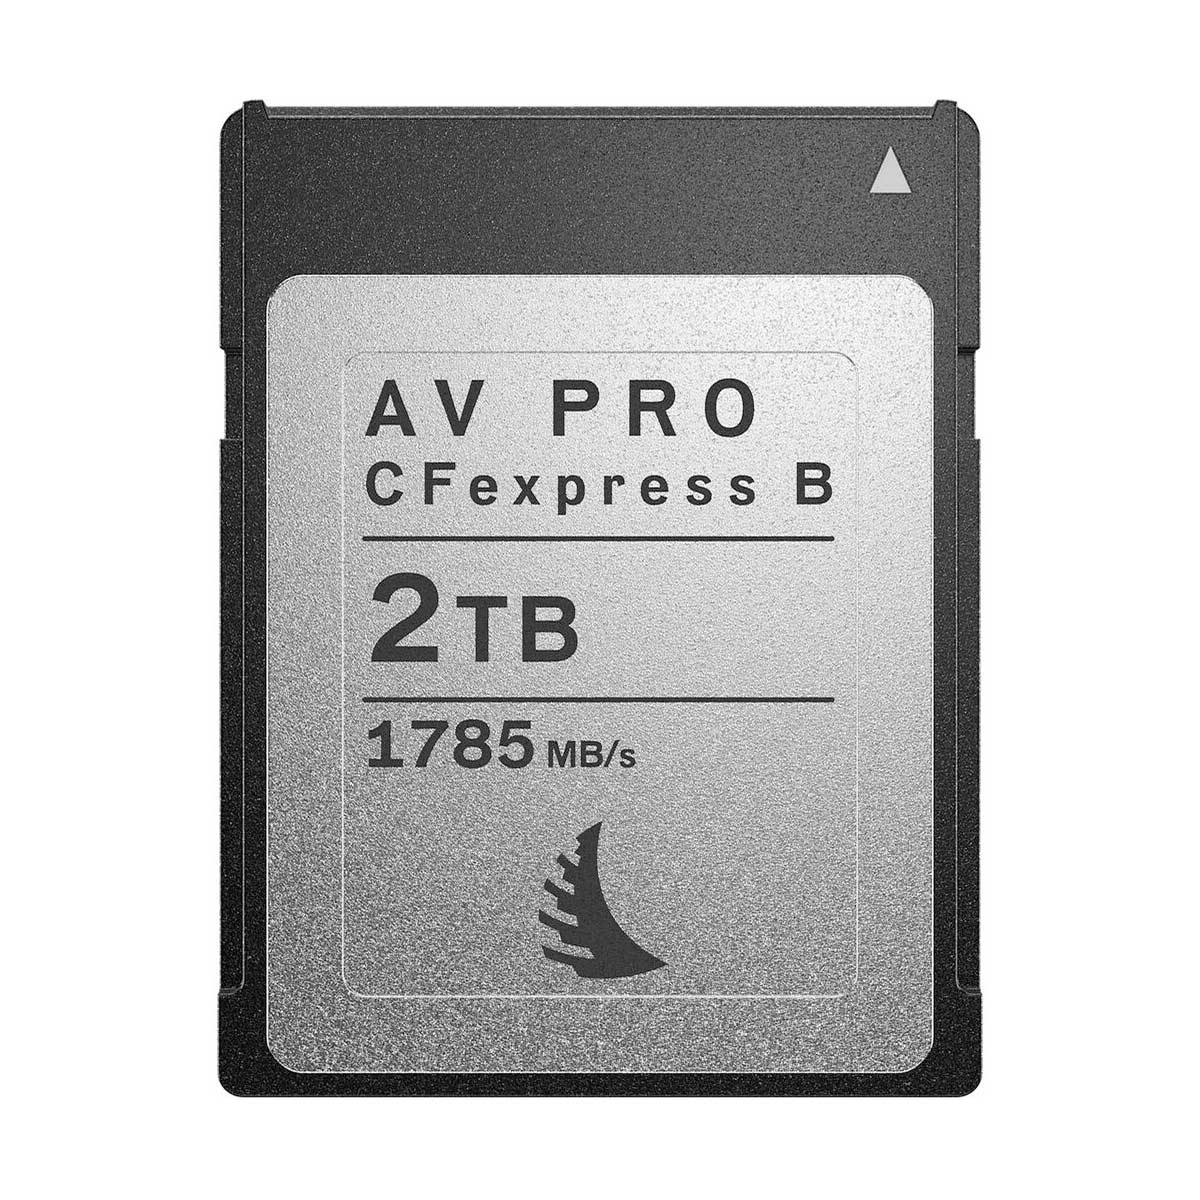 Angelbird 2TB AV Pro MK2 CFexpress 2.0 Type B Memory Card